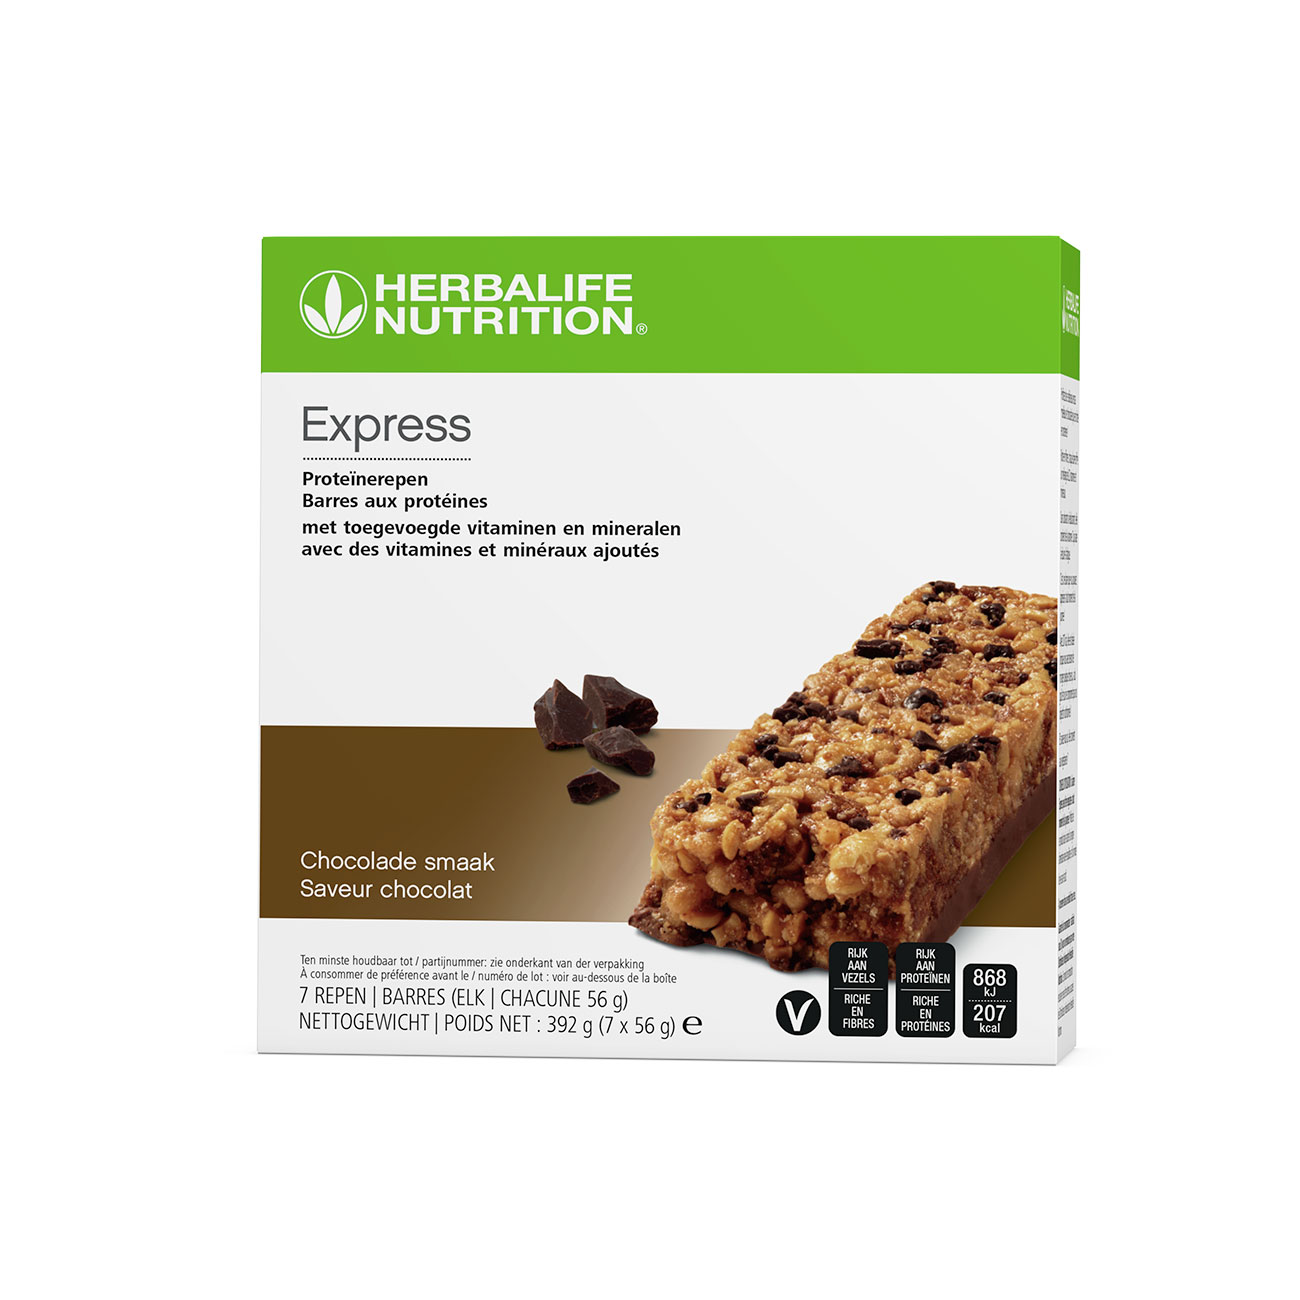 Express Proteïnerepen  chocolade product shot